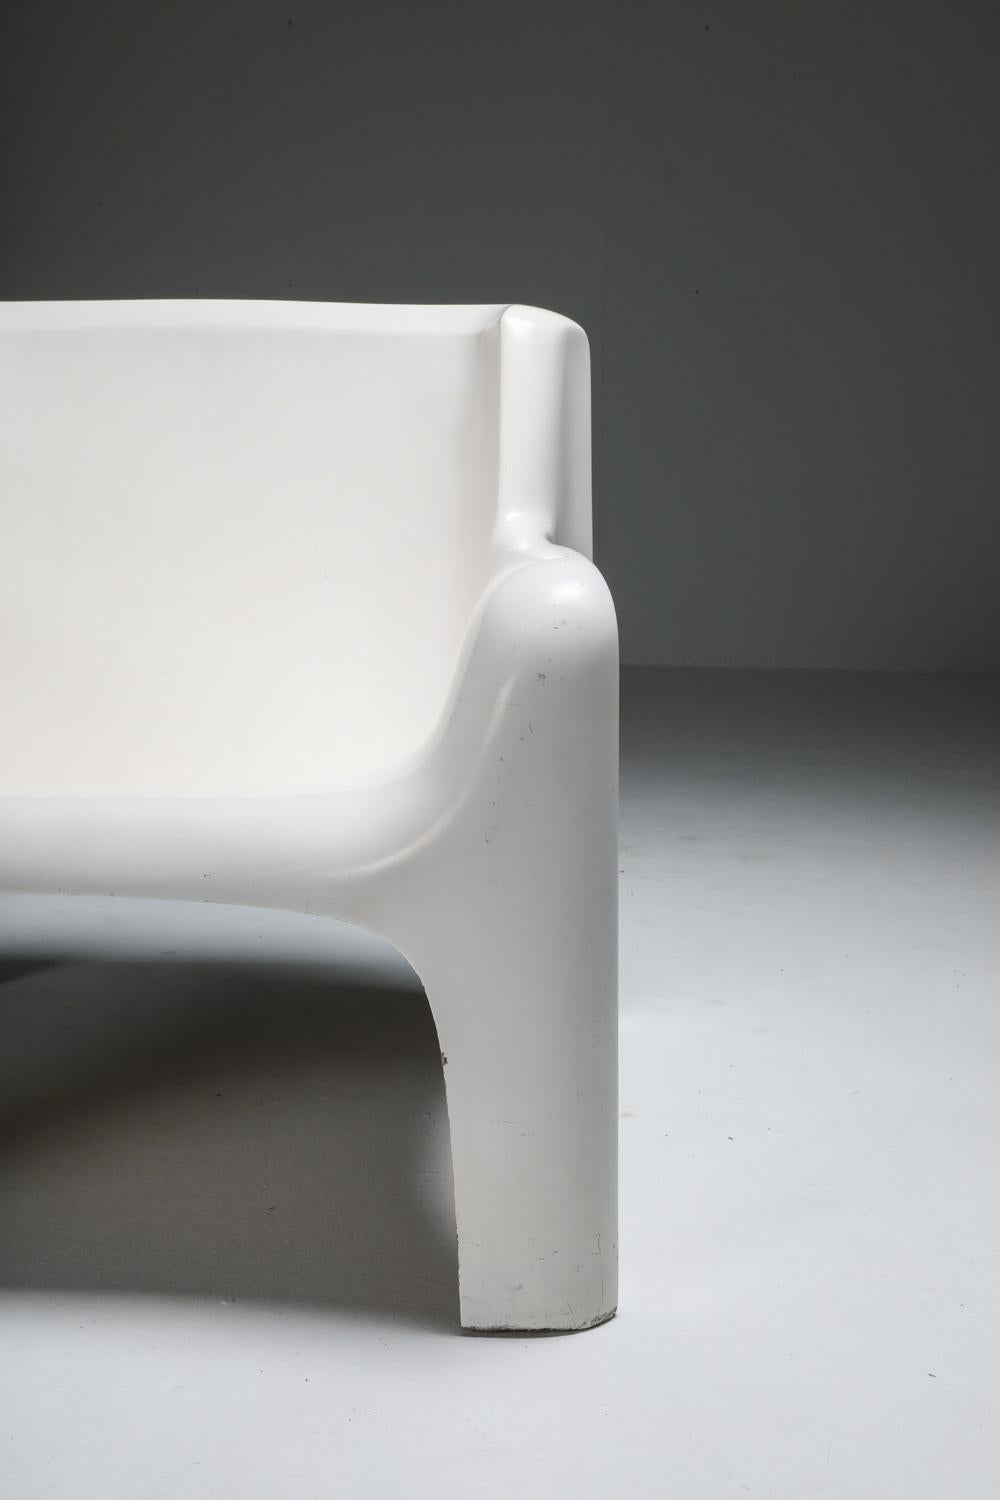 Arflex 'Solar' Lounge Chairs in Fiberglass by Carlo Bartali 1